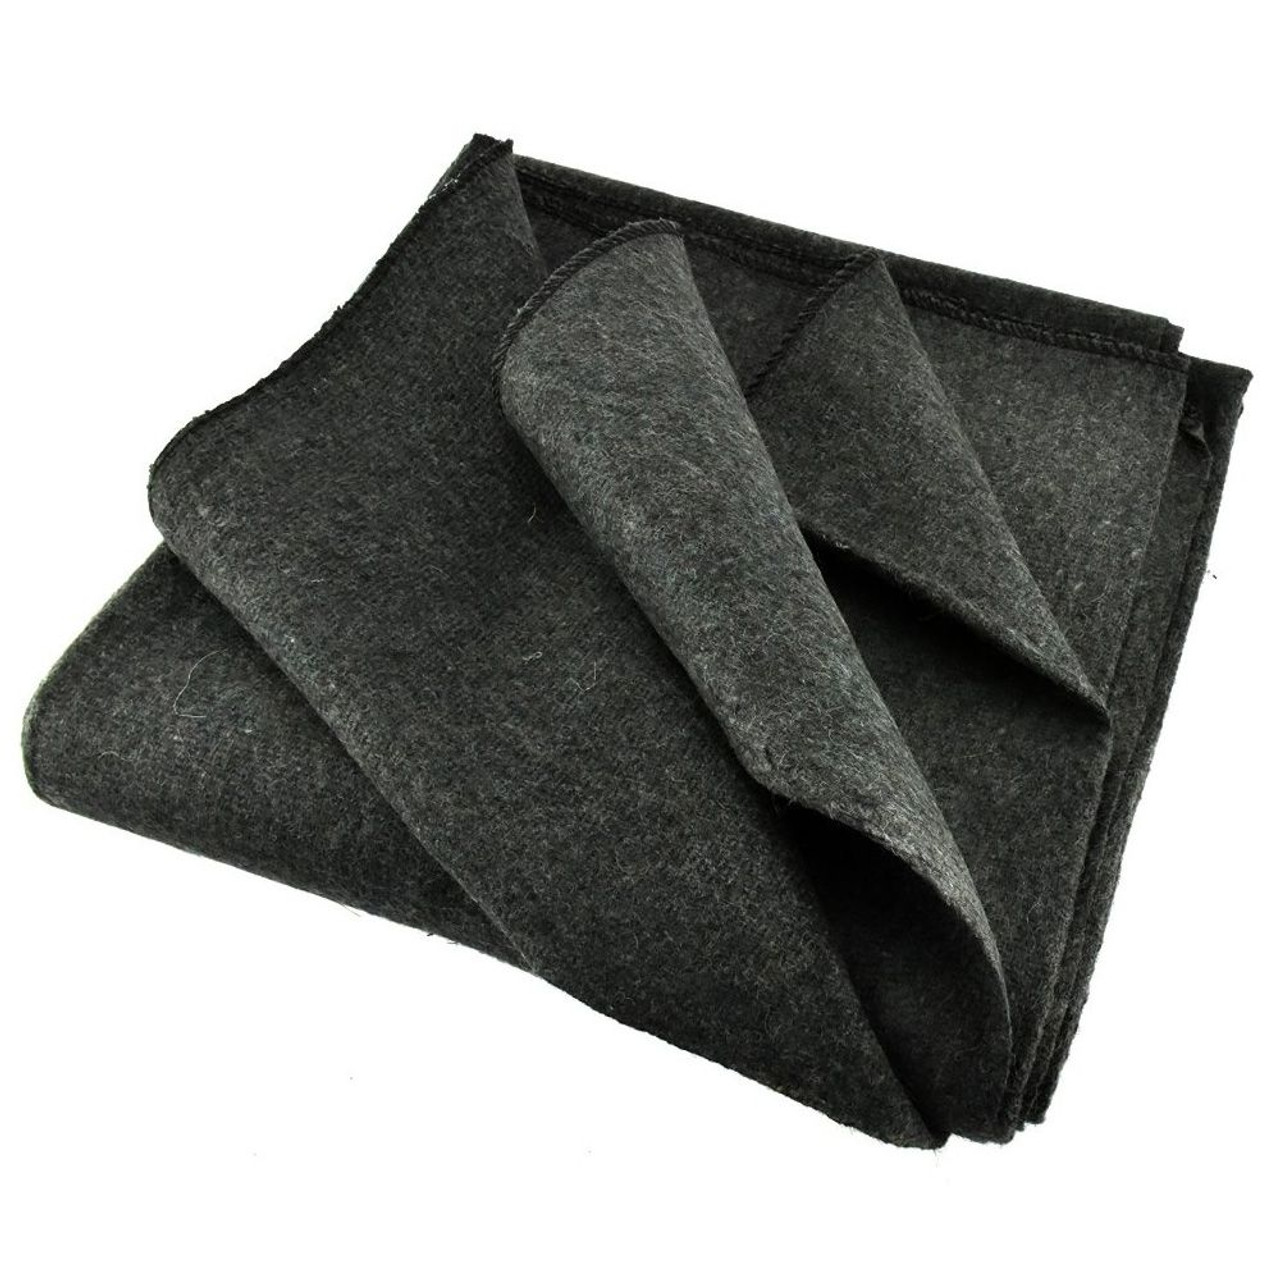 2 lb. Gray Emergency Relief Wool Blanket 51'' x 80'' - 50% Wool